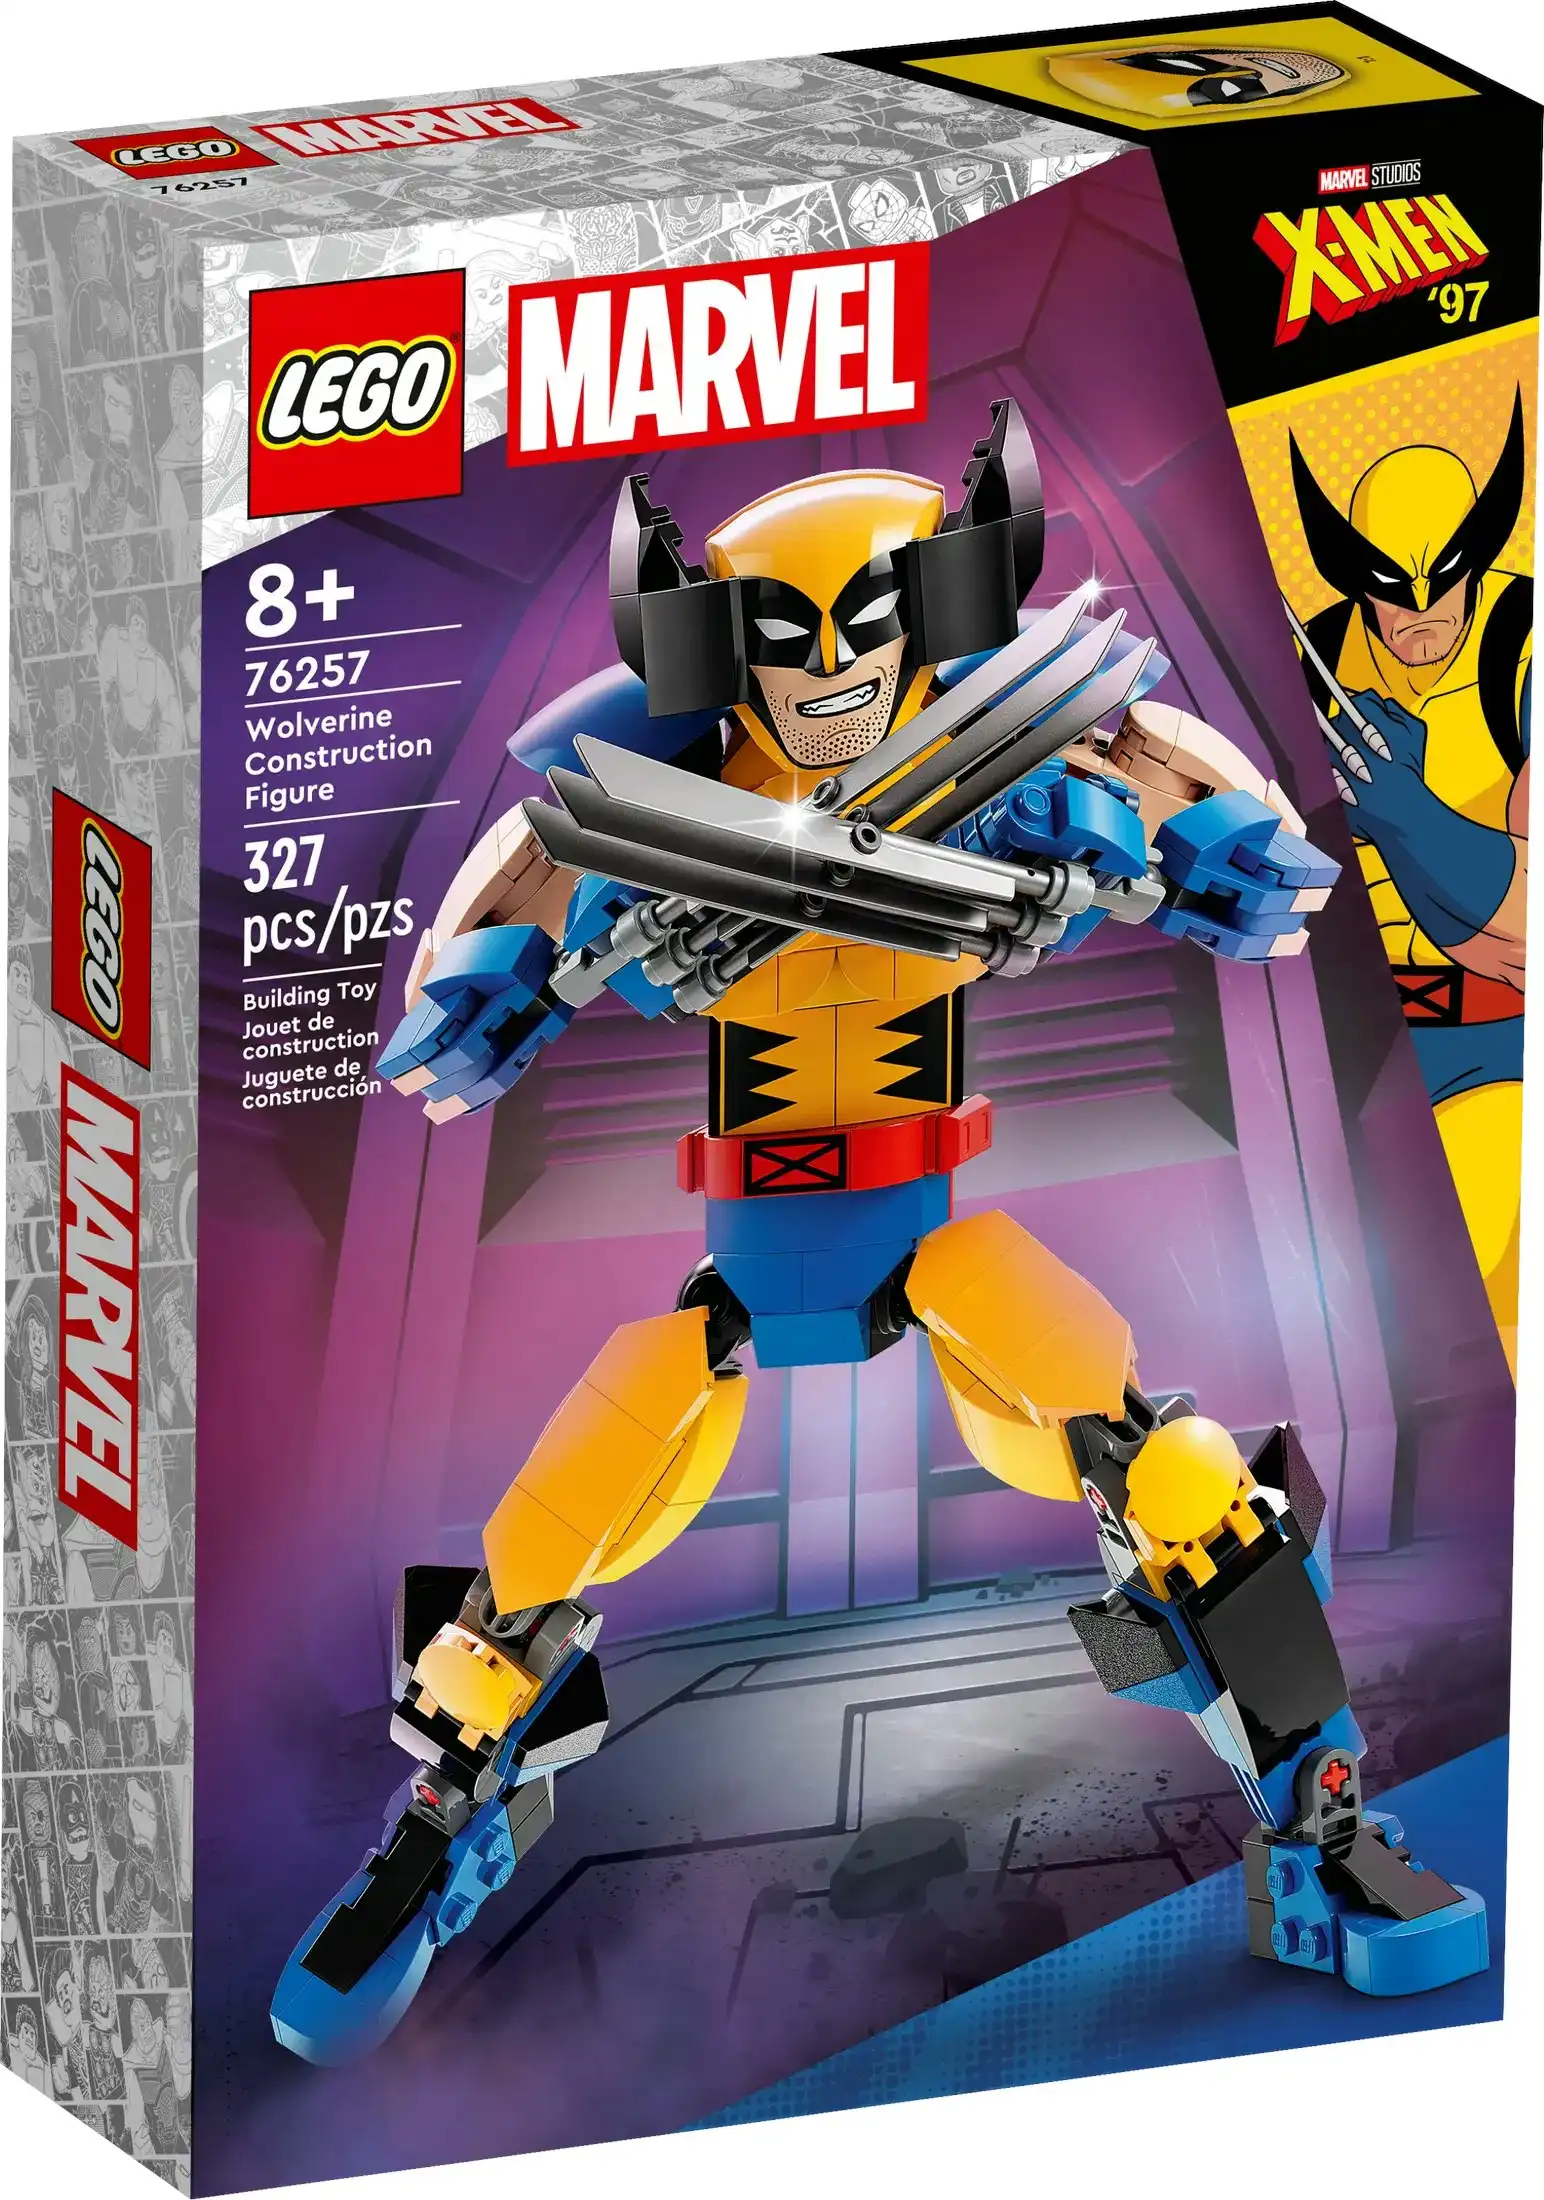 LEGO 76257 Wolverine Construction Figure - Marvel Super Heroes